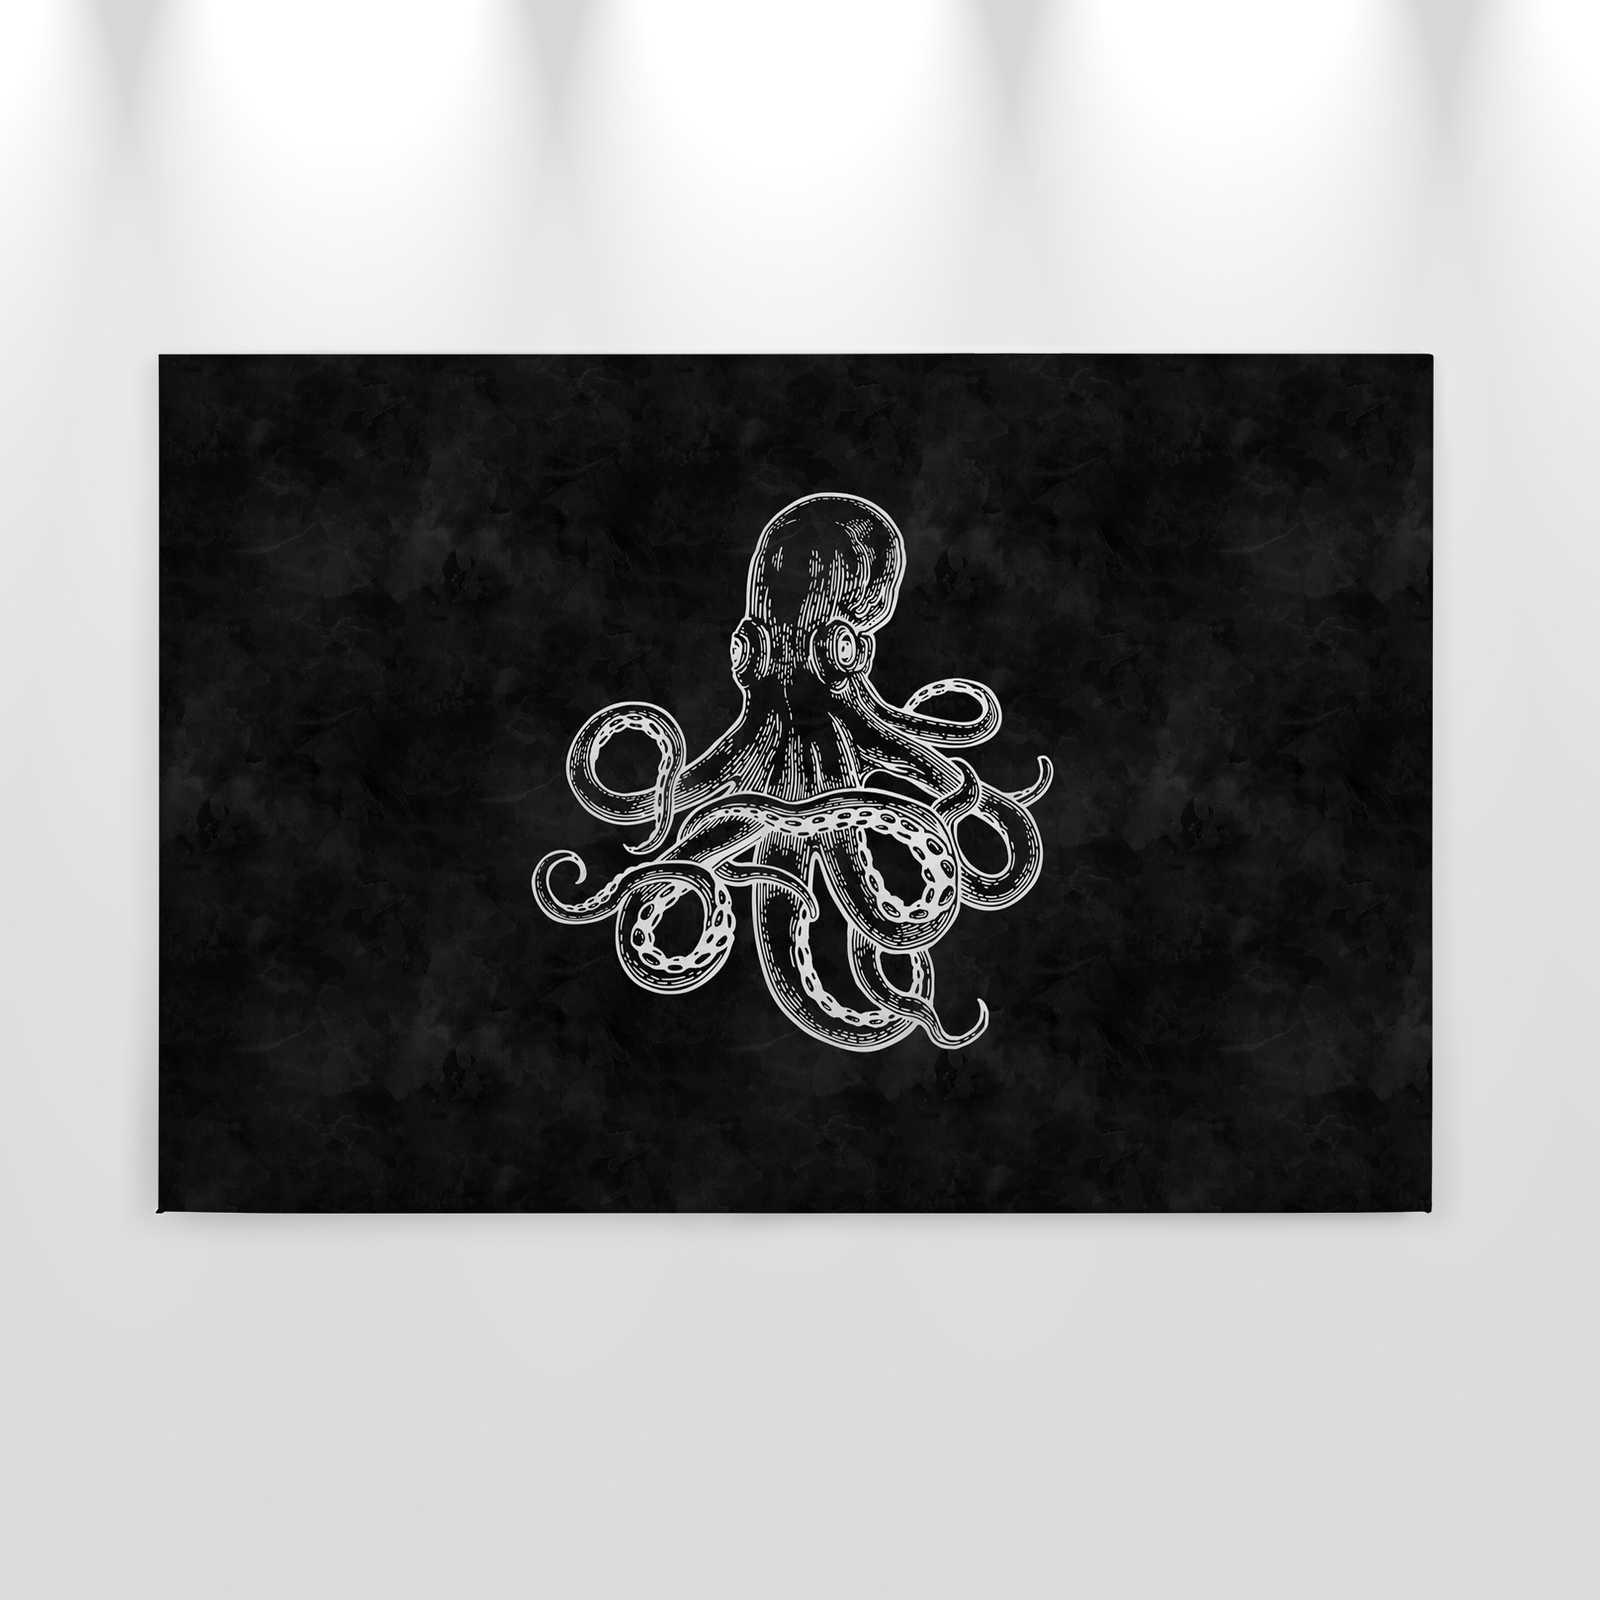             Black & White Canvas Octopus & Blackboard Look - 0.90 m x 0.60 m
        